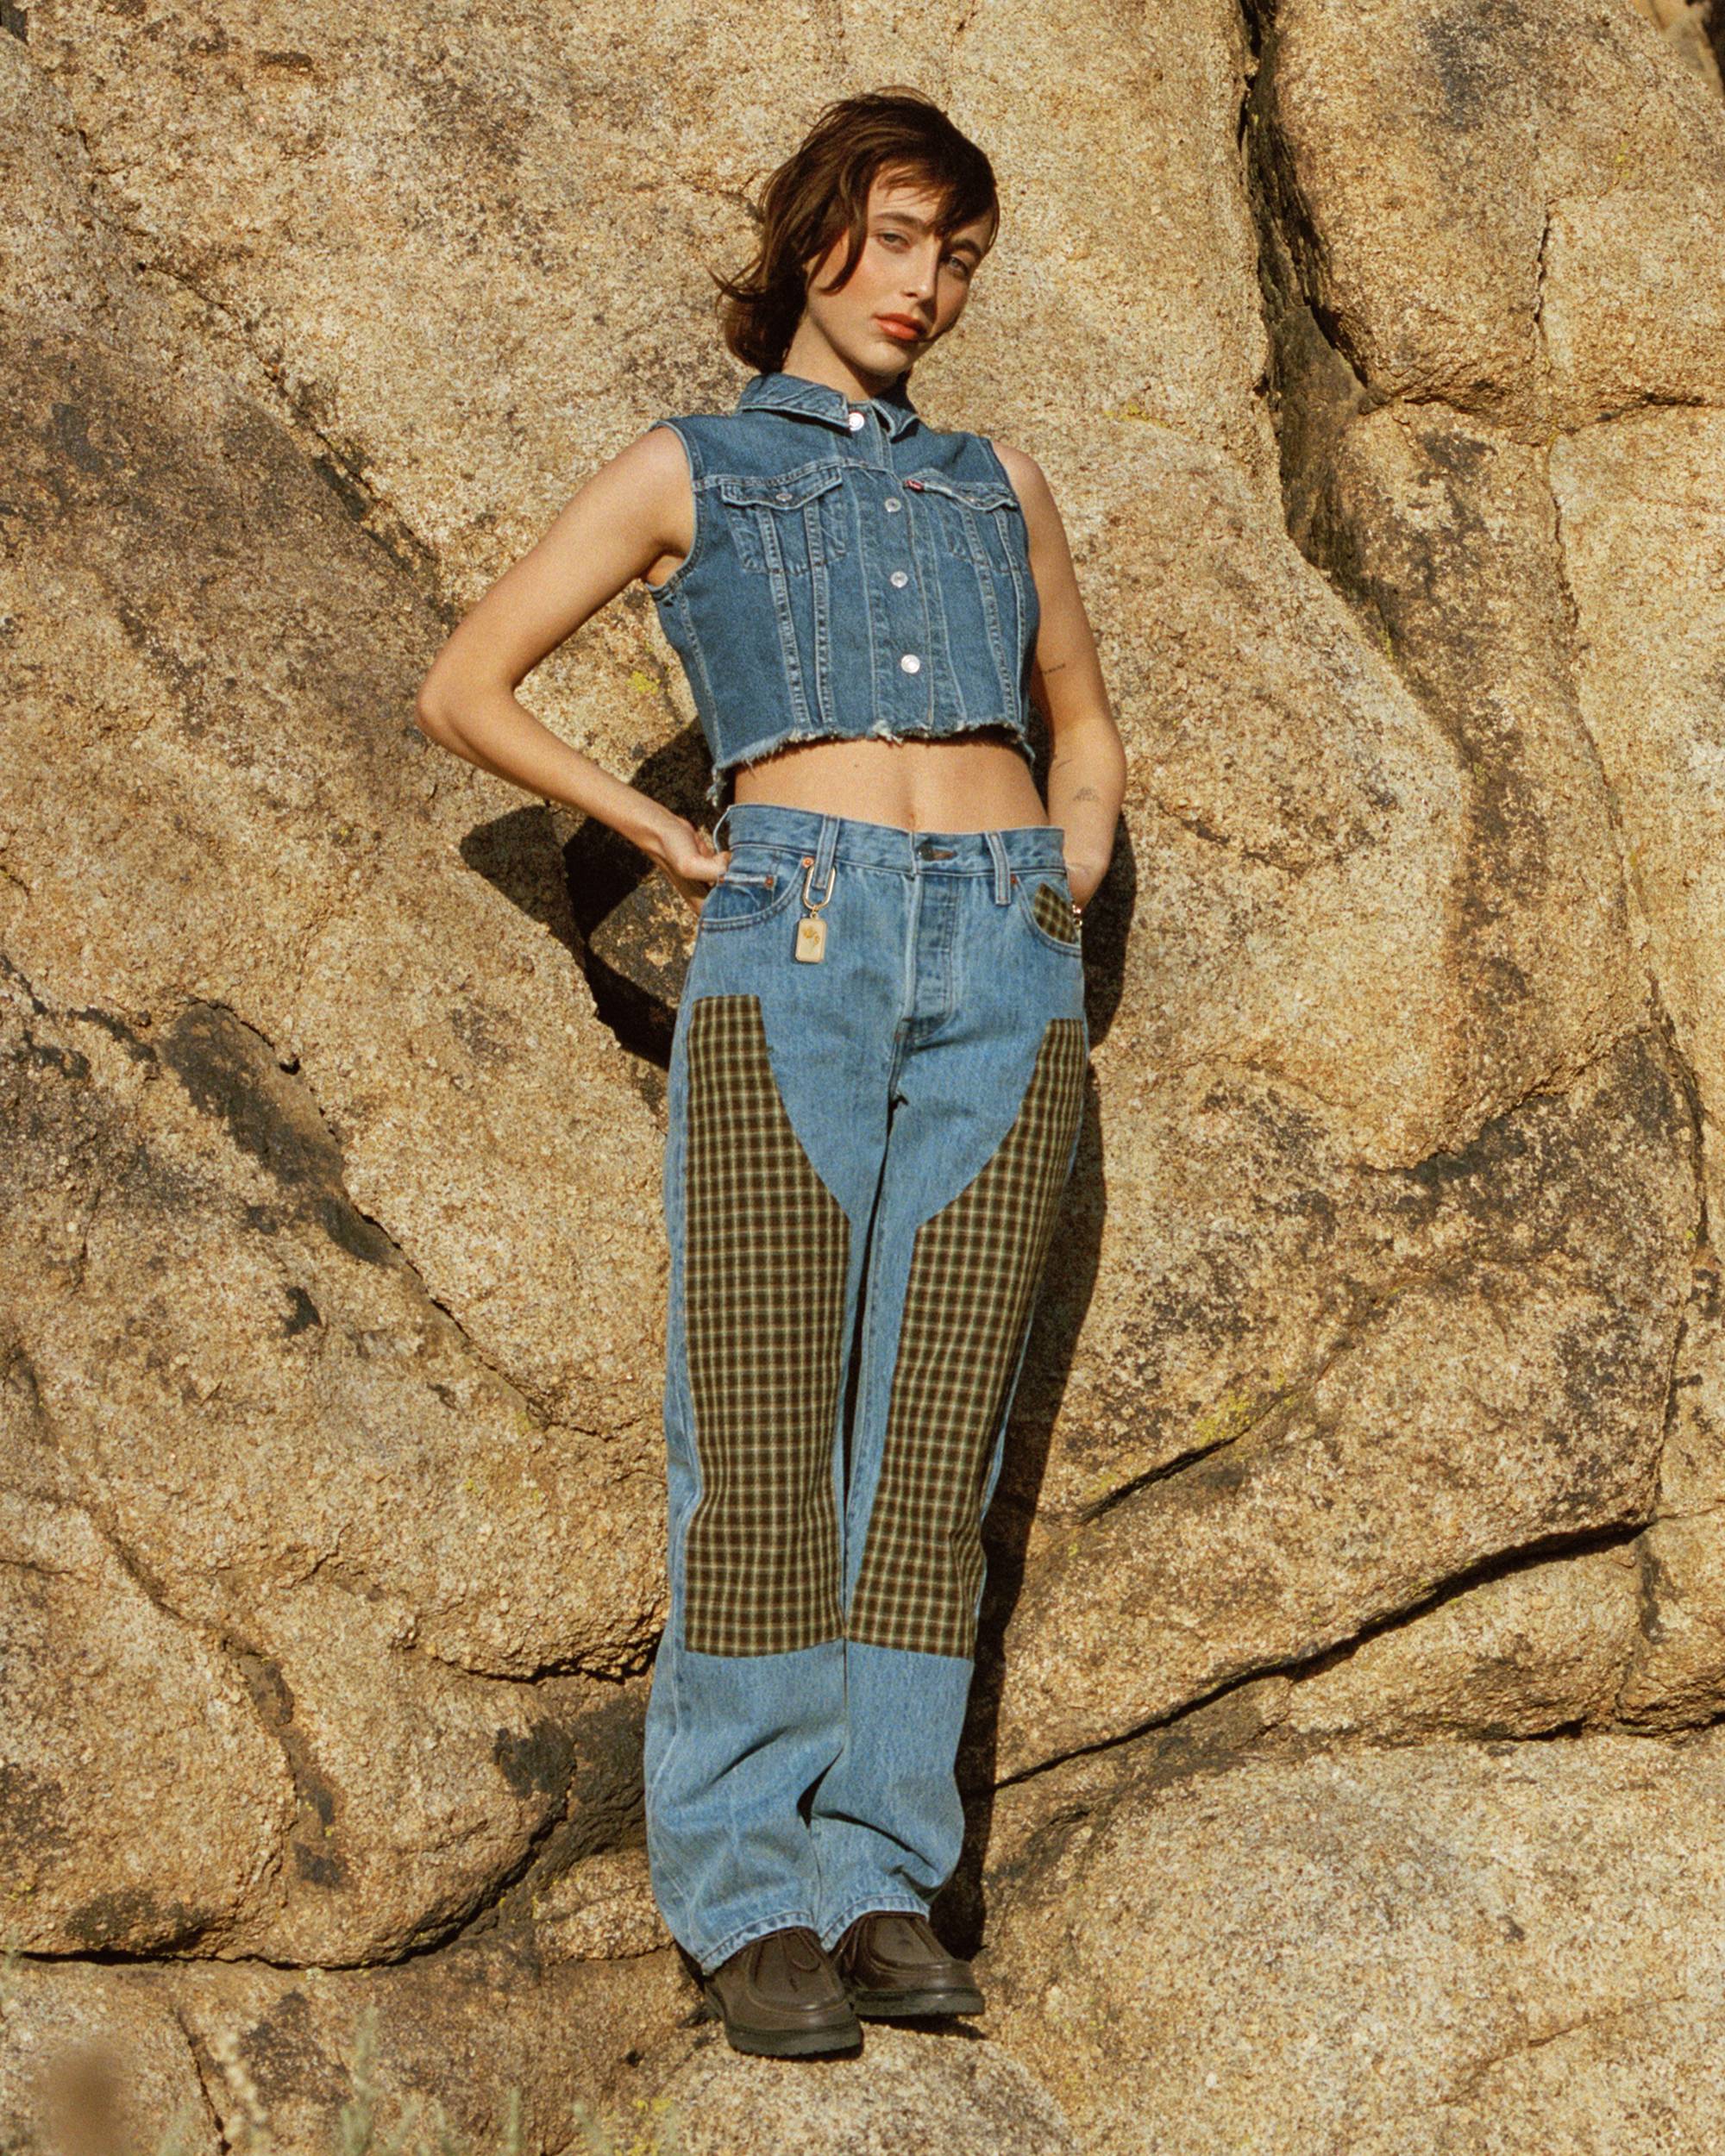 Image of Emma Chamberlain wearing the Levi's® x Emma Chamberlain collaboration against a rocky backdrop